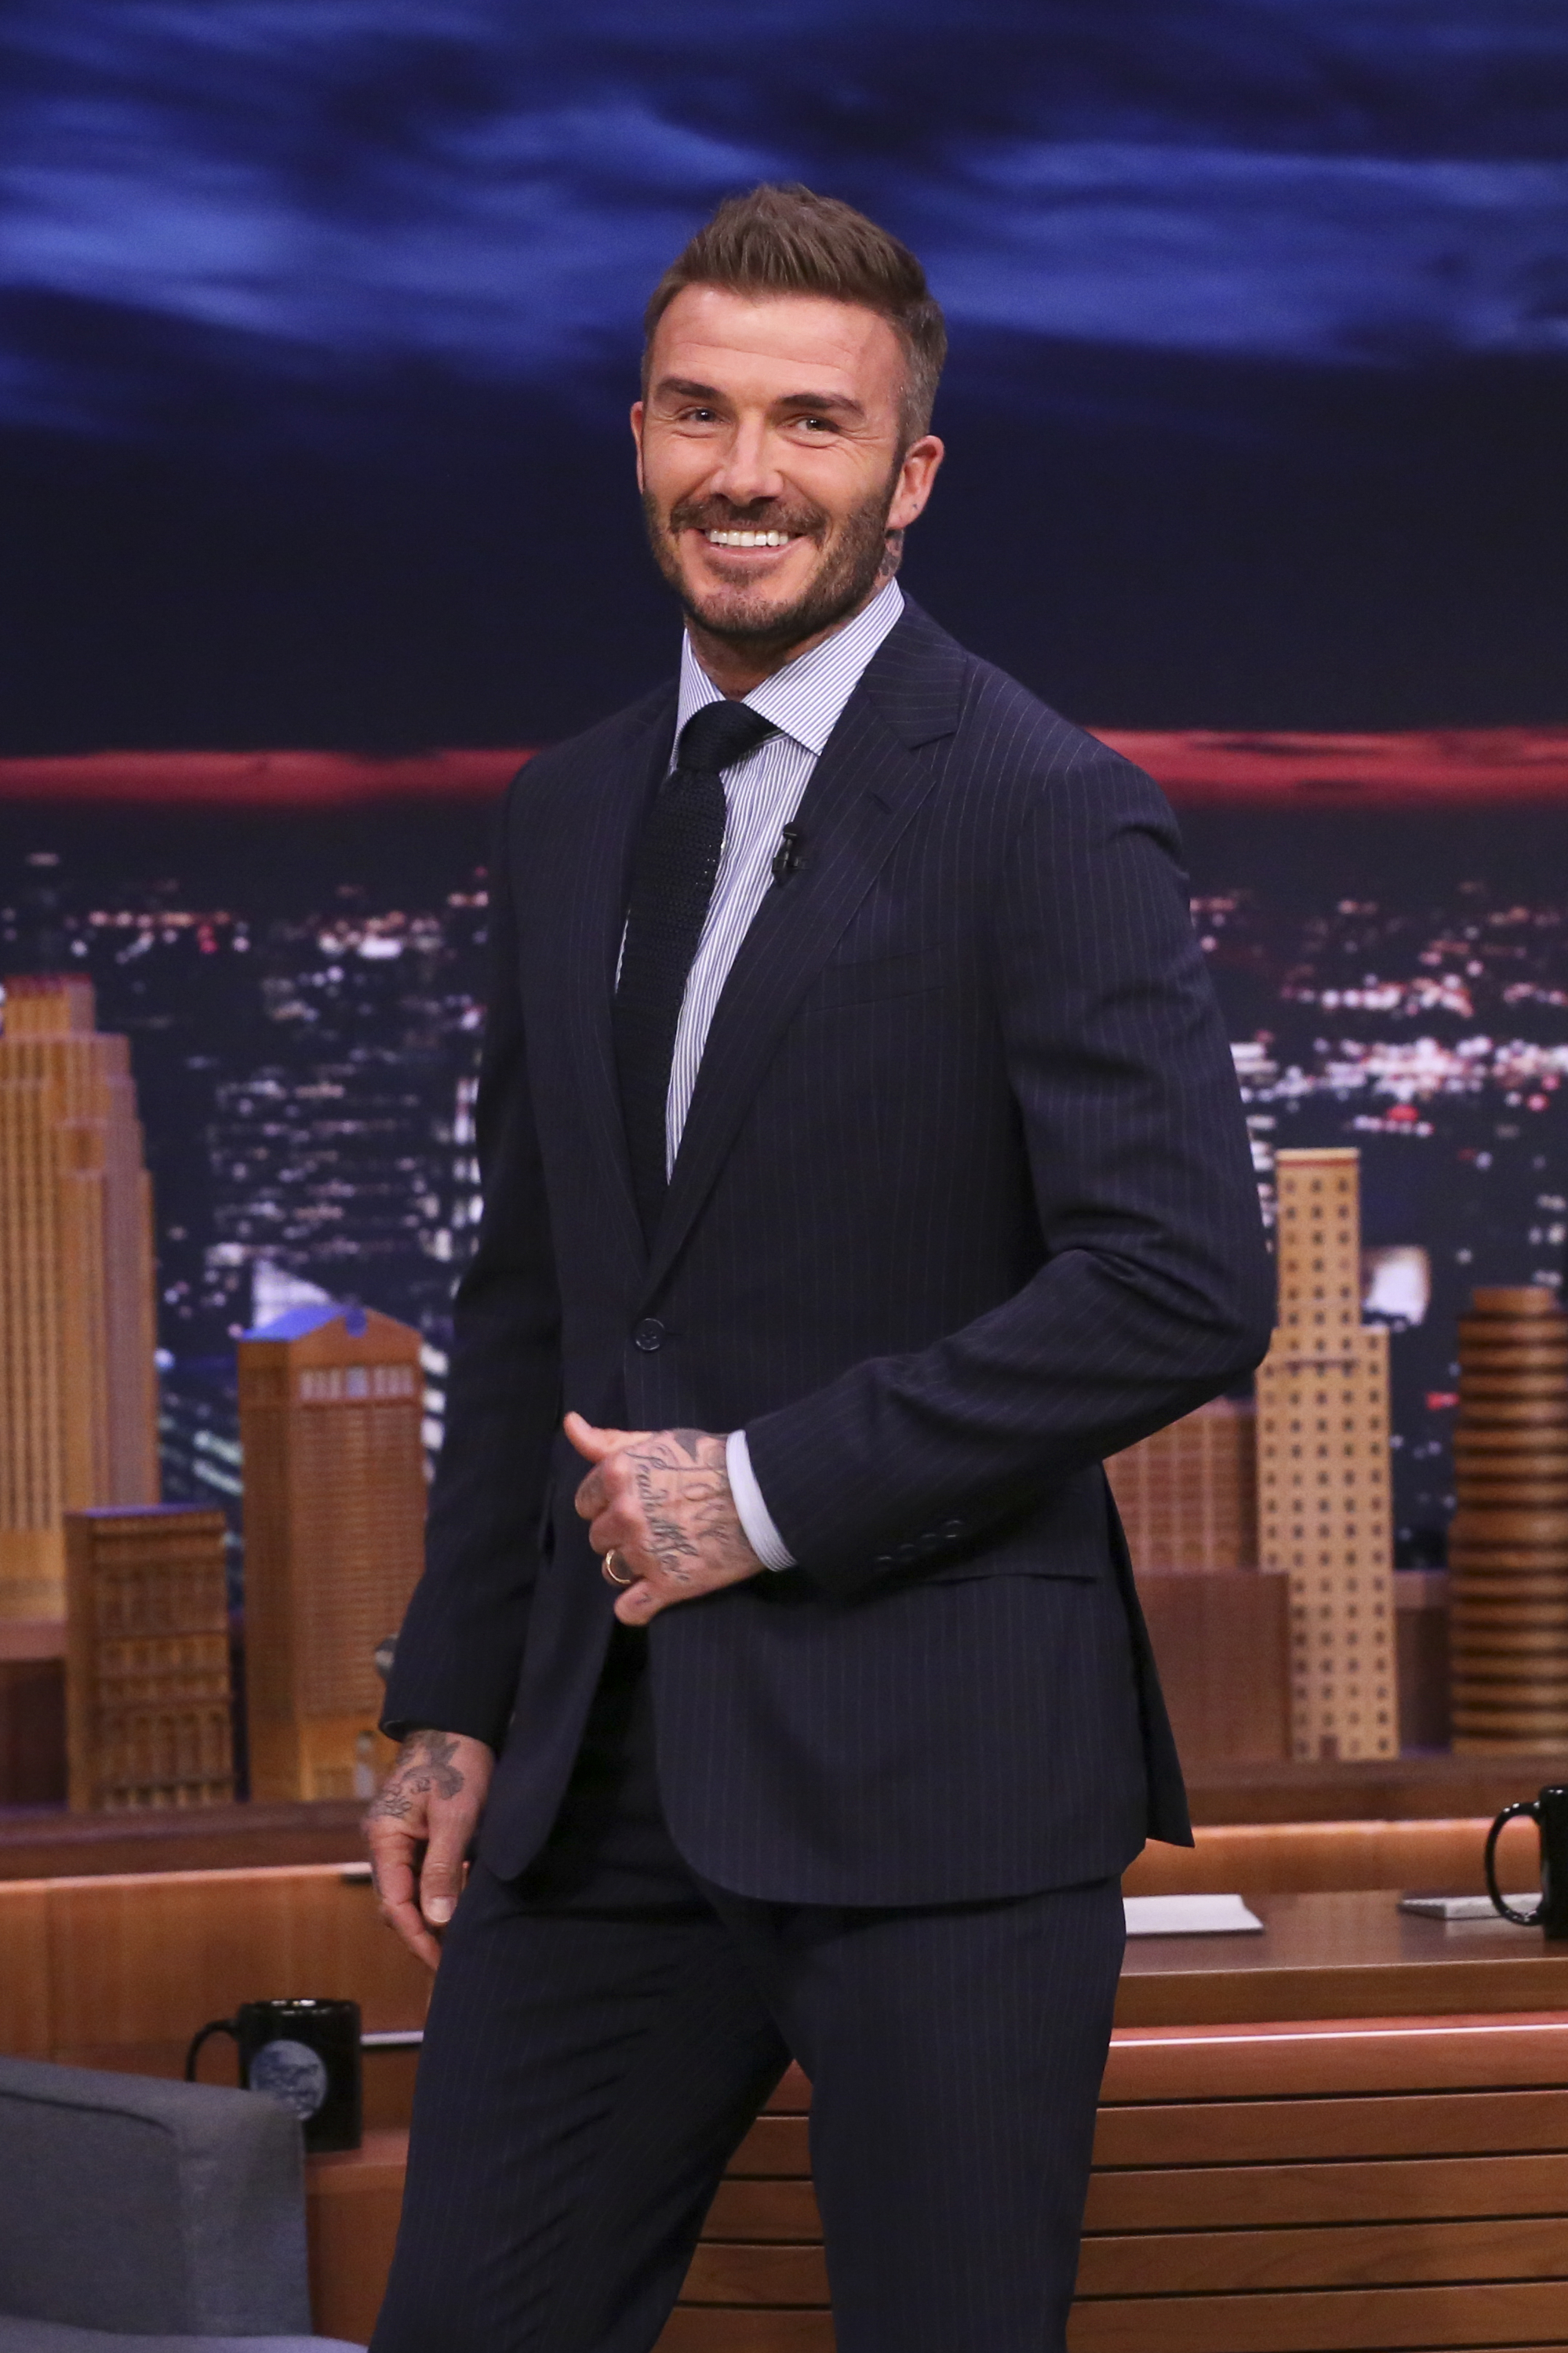 David Beckham bei der "The Tonight Show with Jimmy Fallon" am 26. Februar 2020 | Quelle: Getty Images